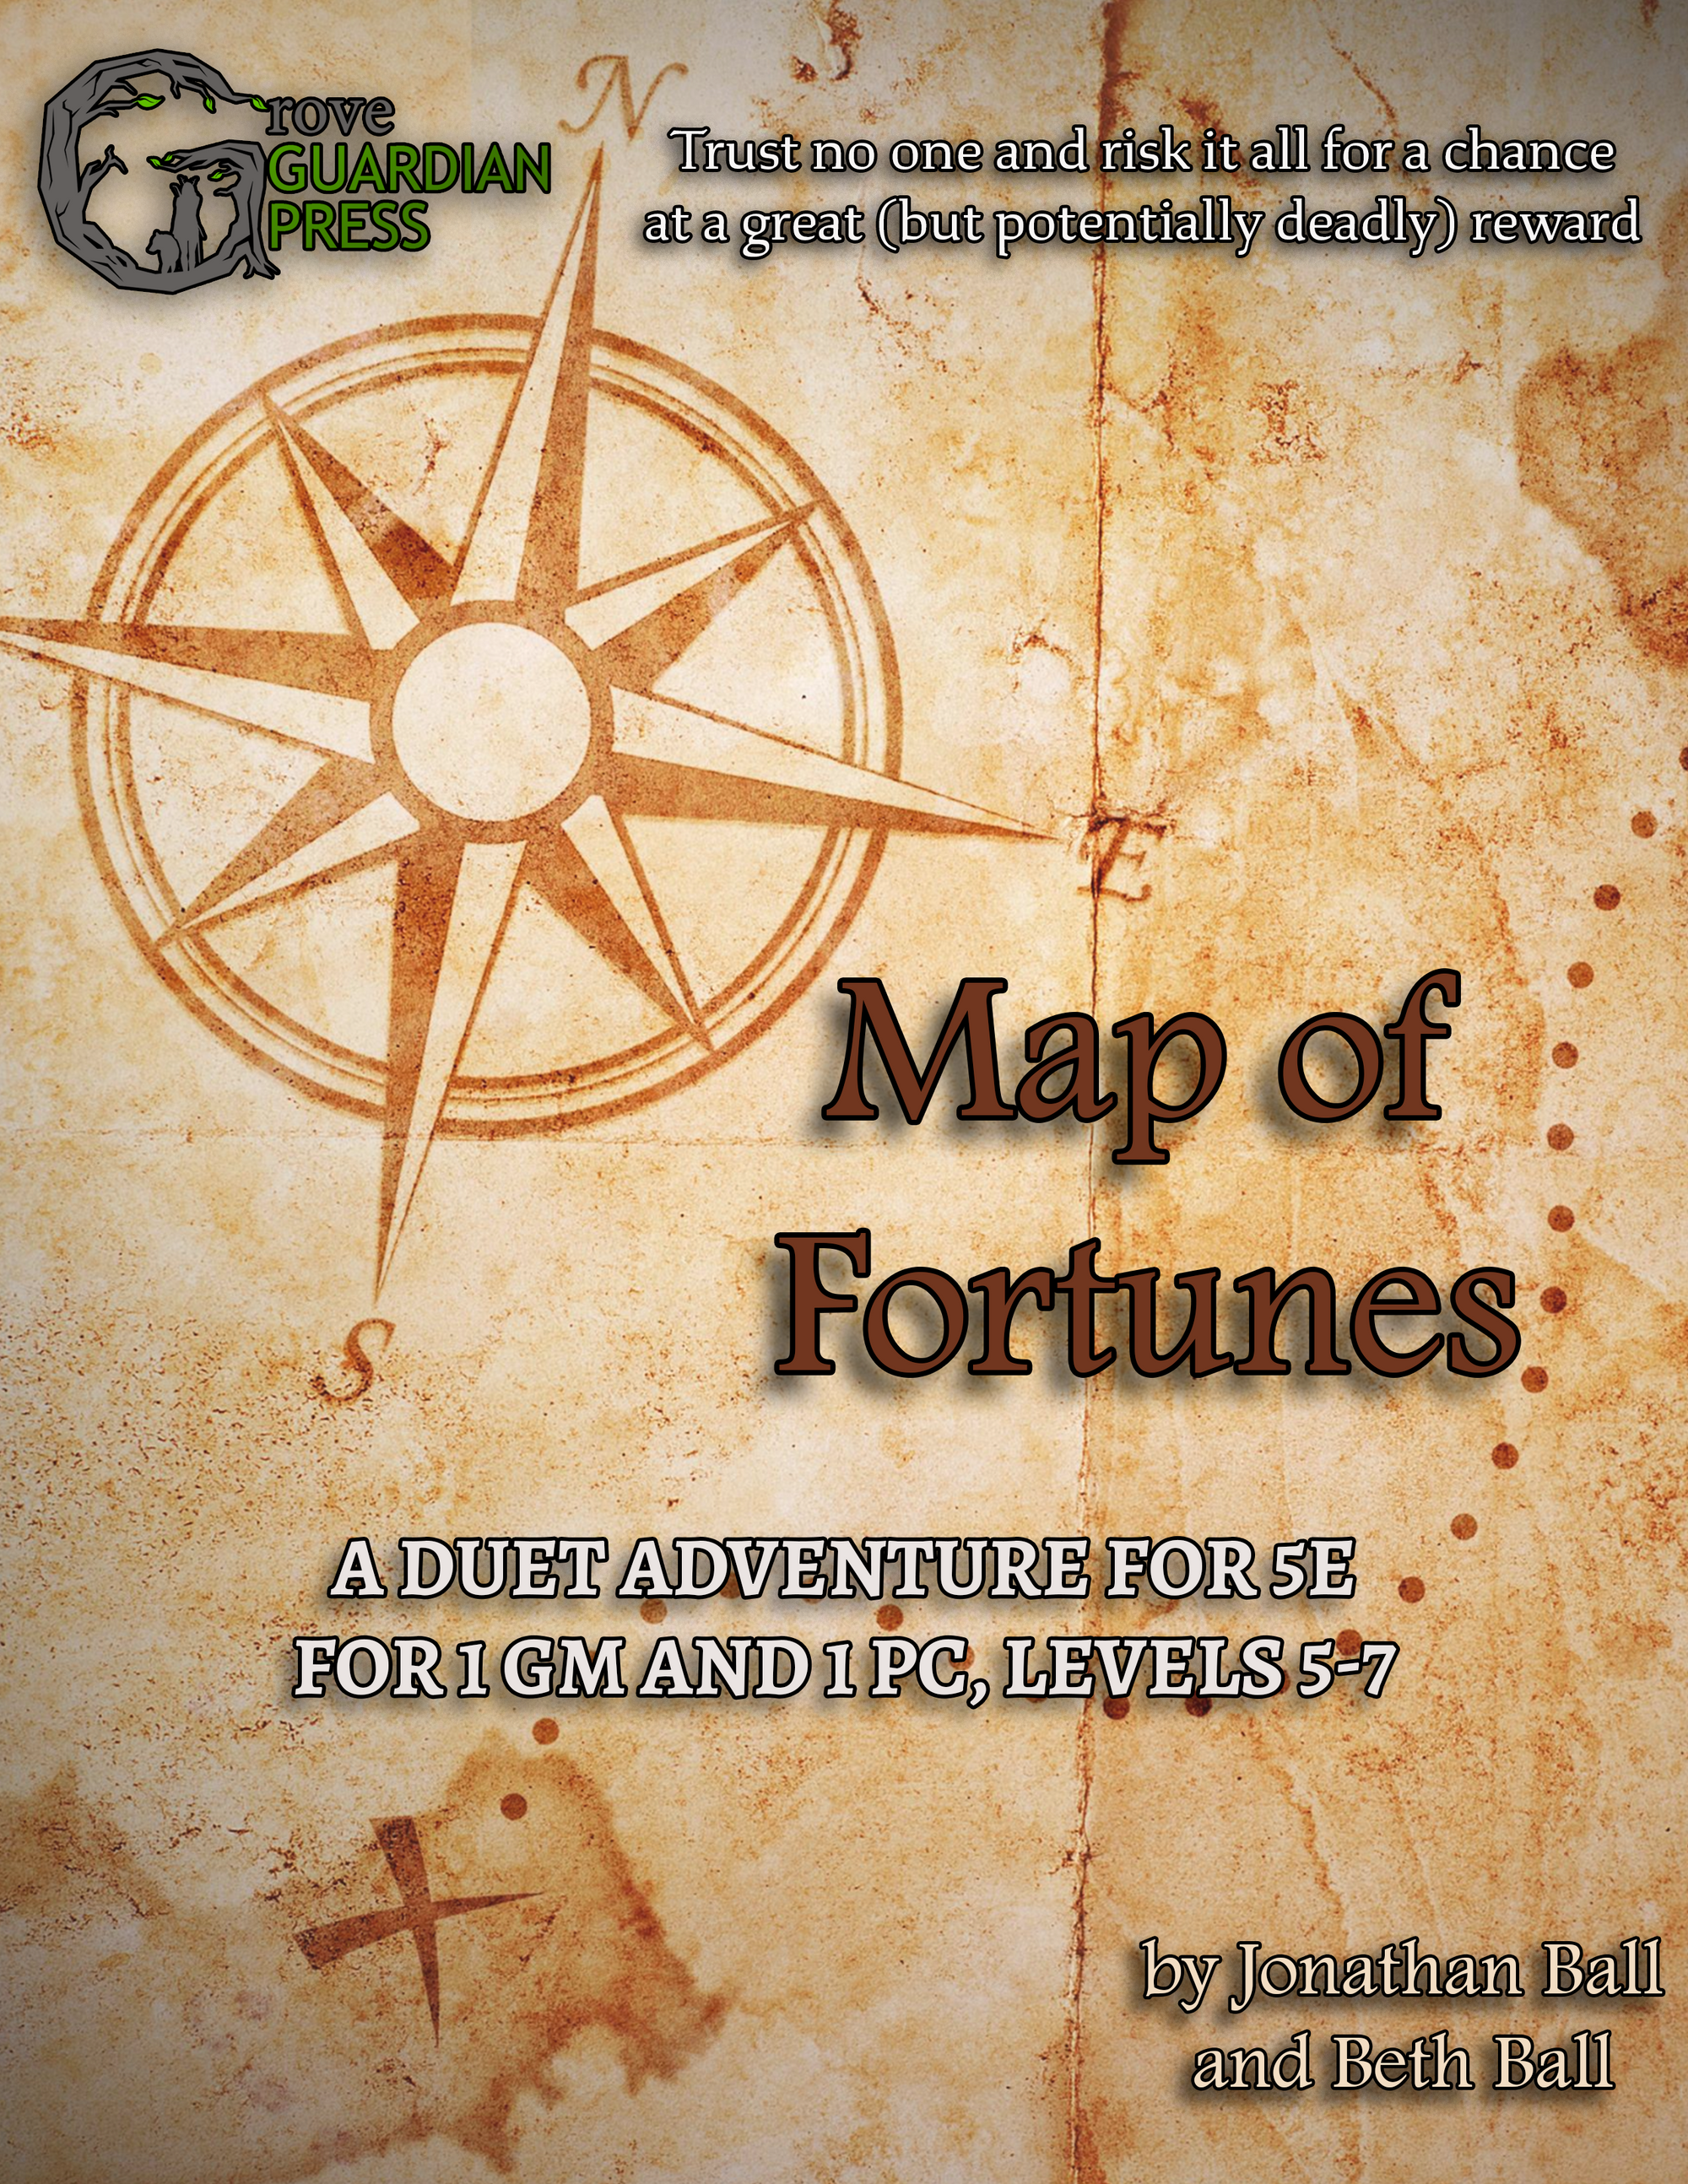 Map of Fortunes—a duet 5e adventure